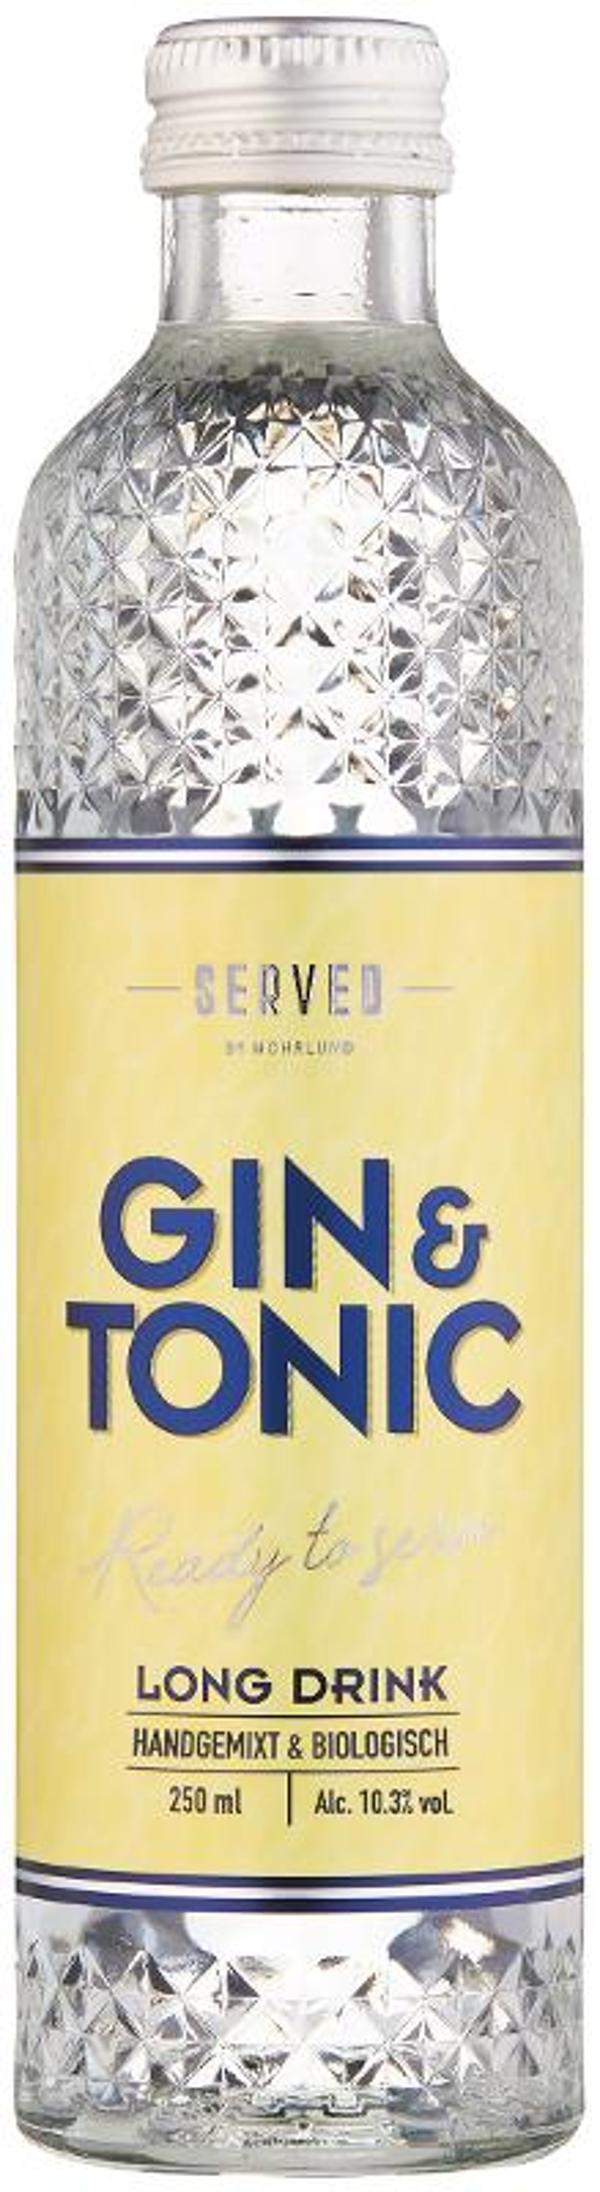 Produktfoto zu Gin & Tonic, Long Drink Alk. 10,3% vol